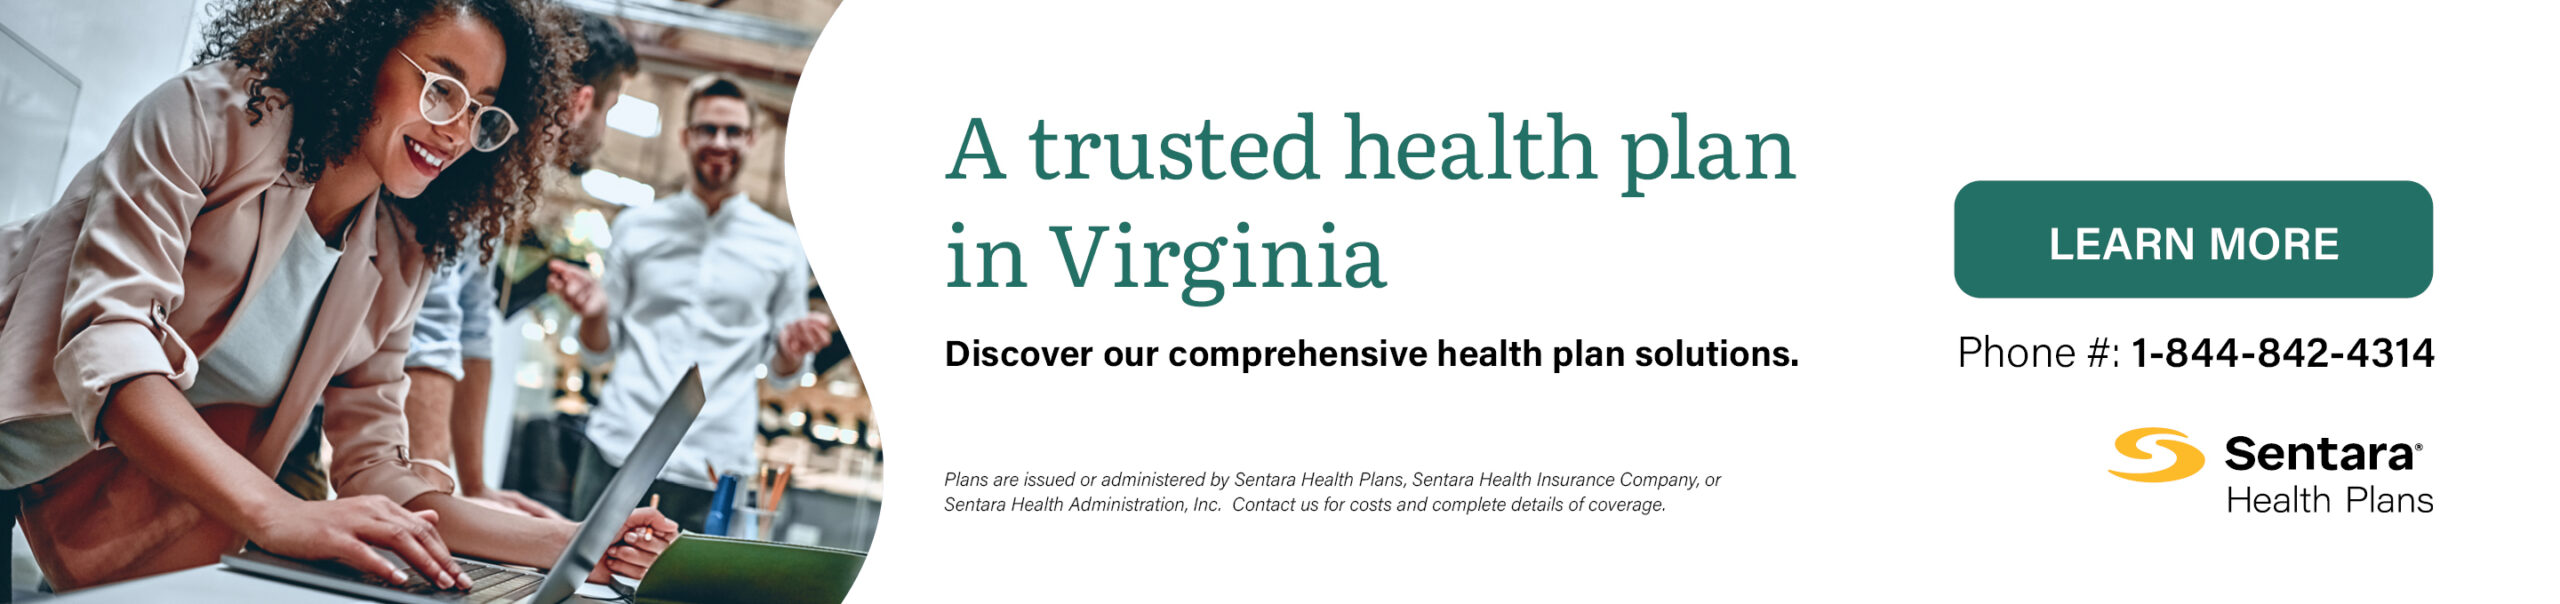 Ad for Sentara Health Plans